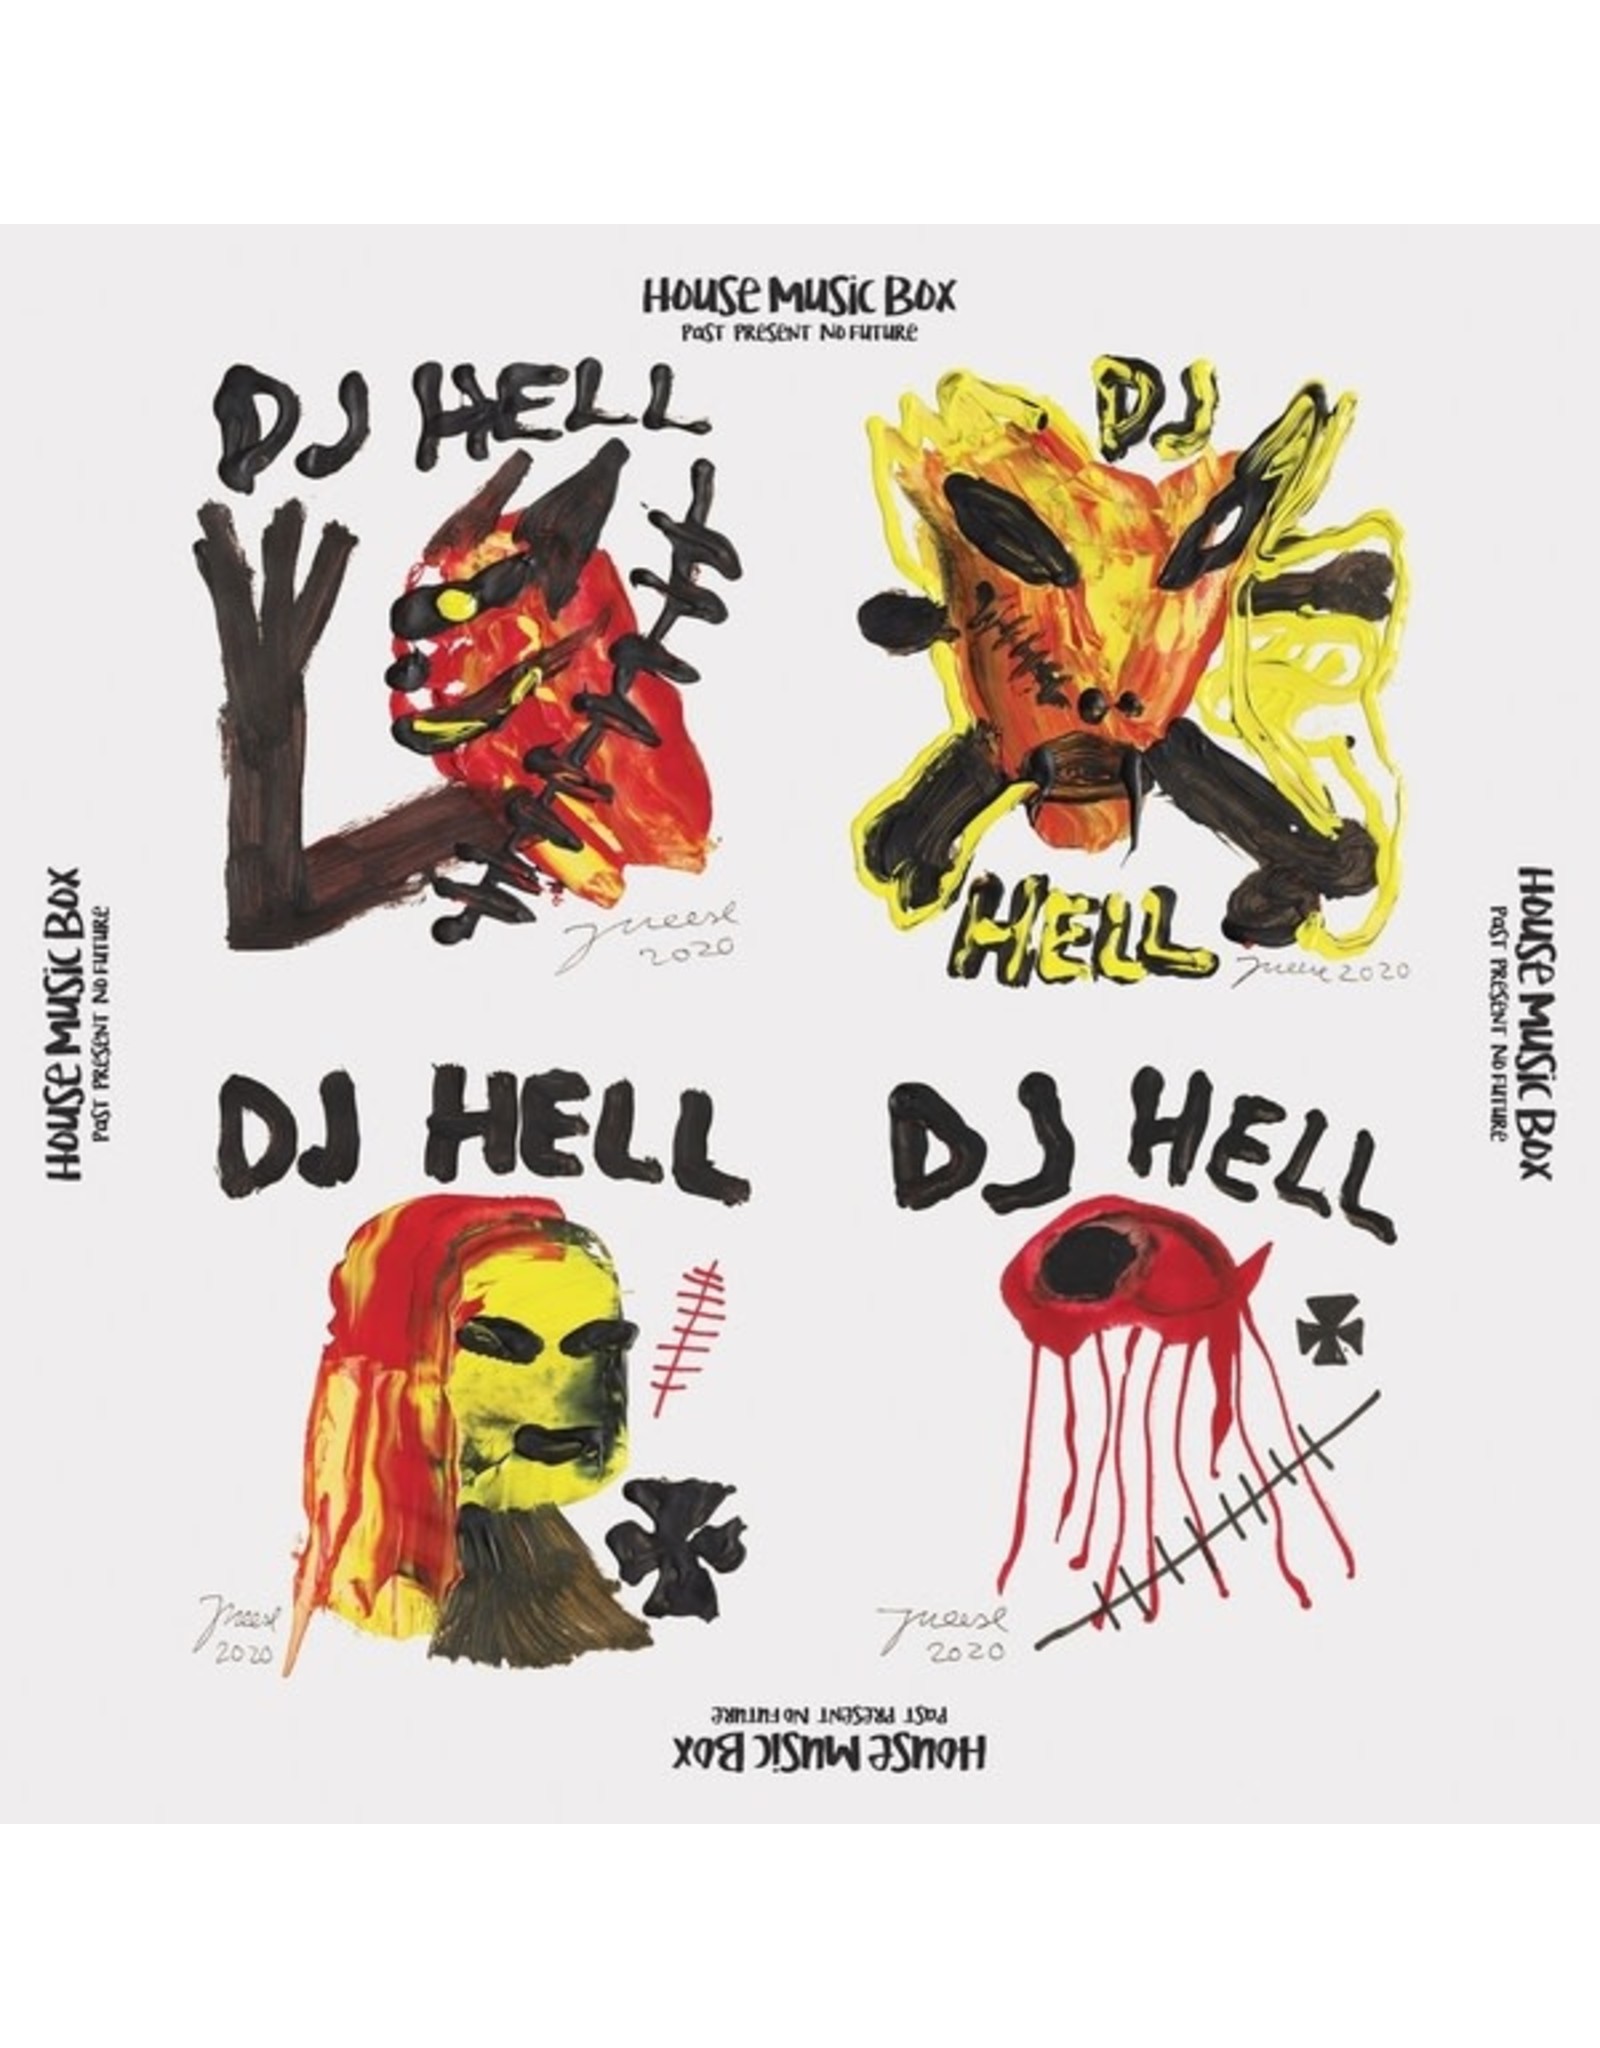 New Vinyl DJ Hell - House Music Box (Past, Present, No Future) 2LP